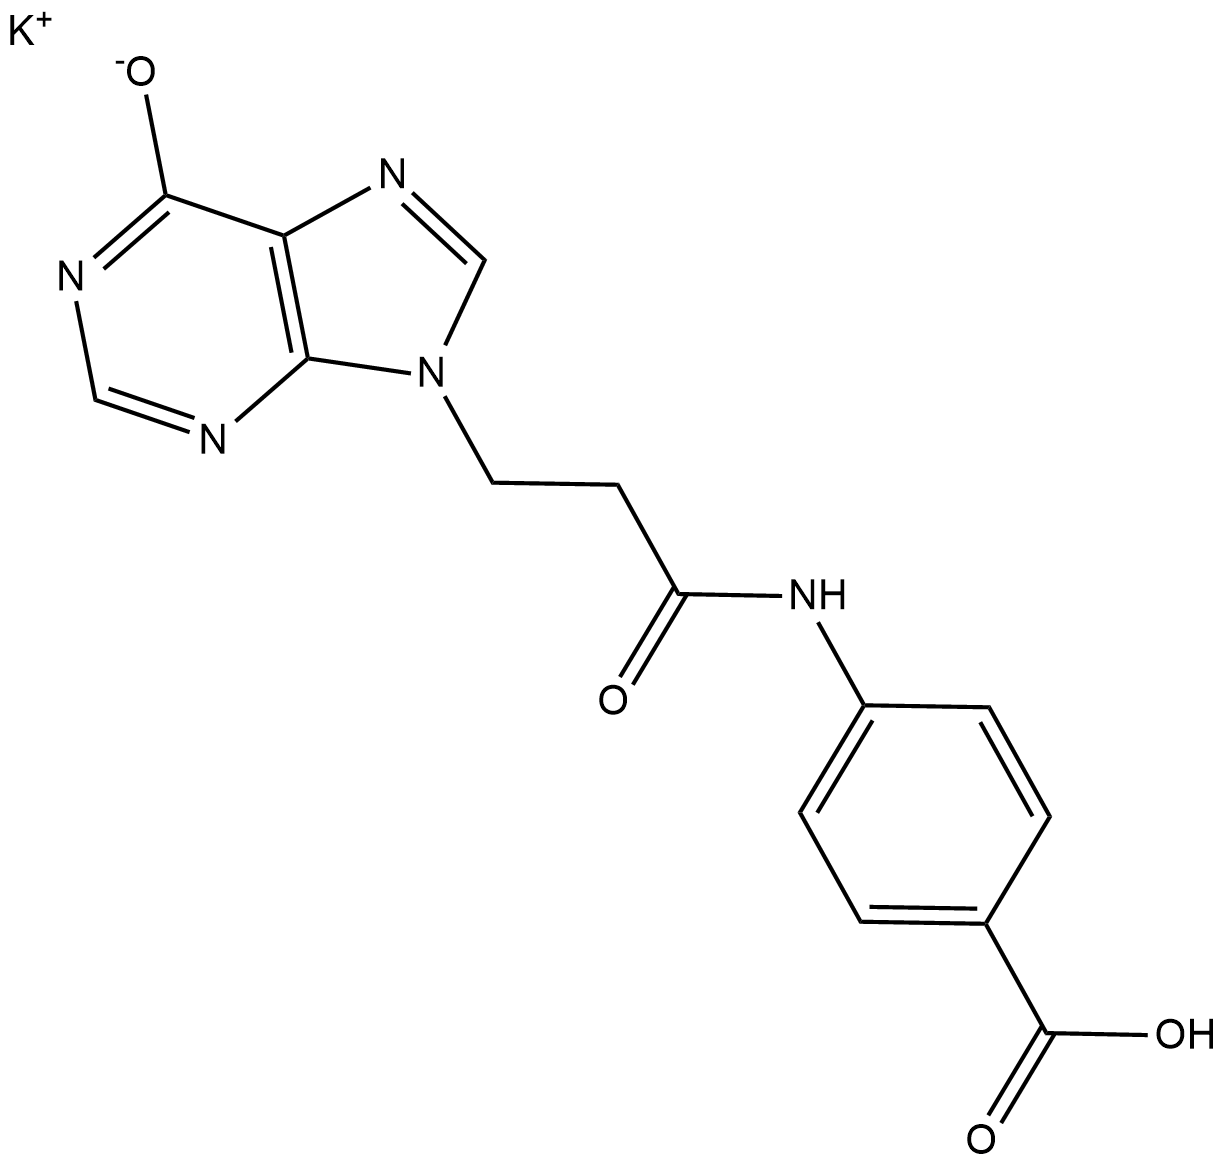 Leteprinim (potassium salt)  Chemical Structure